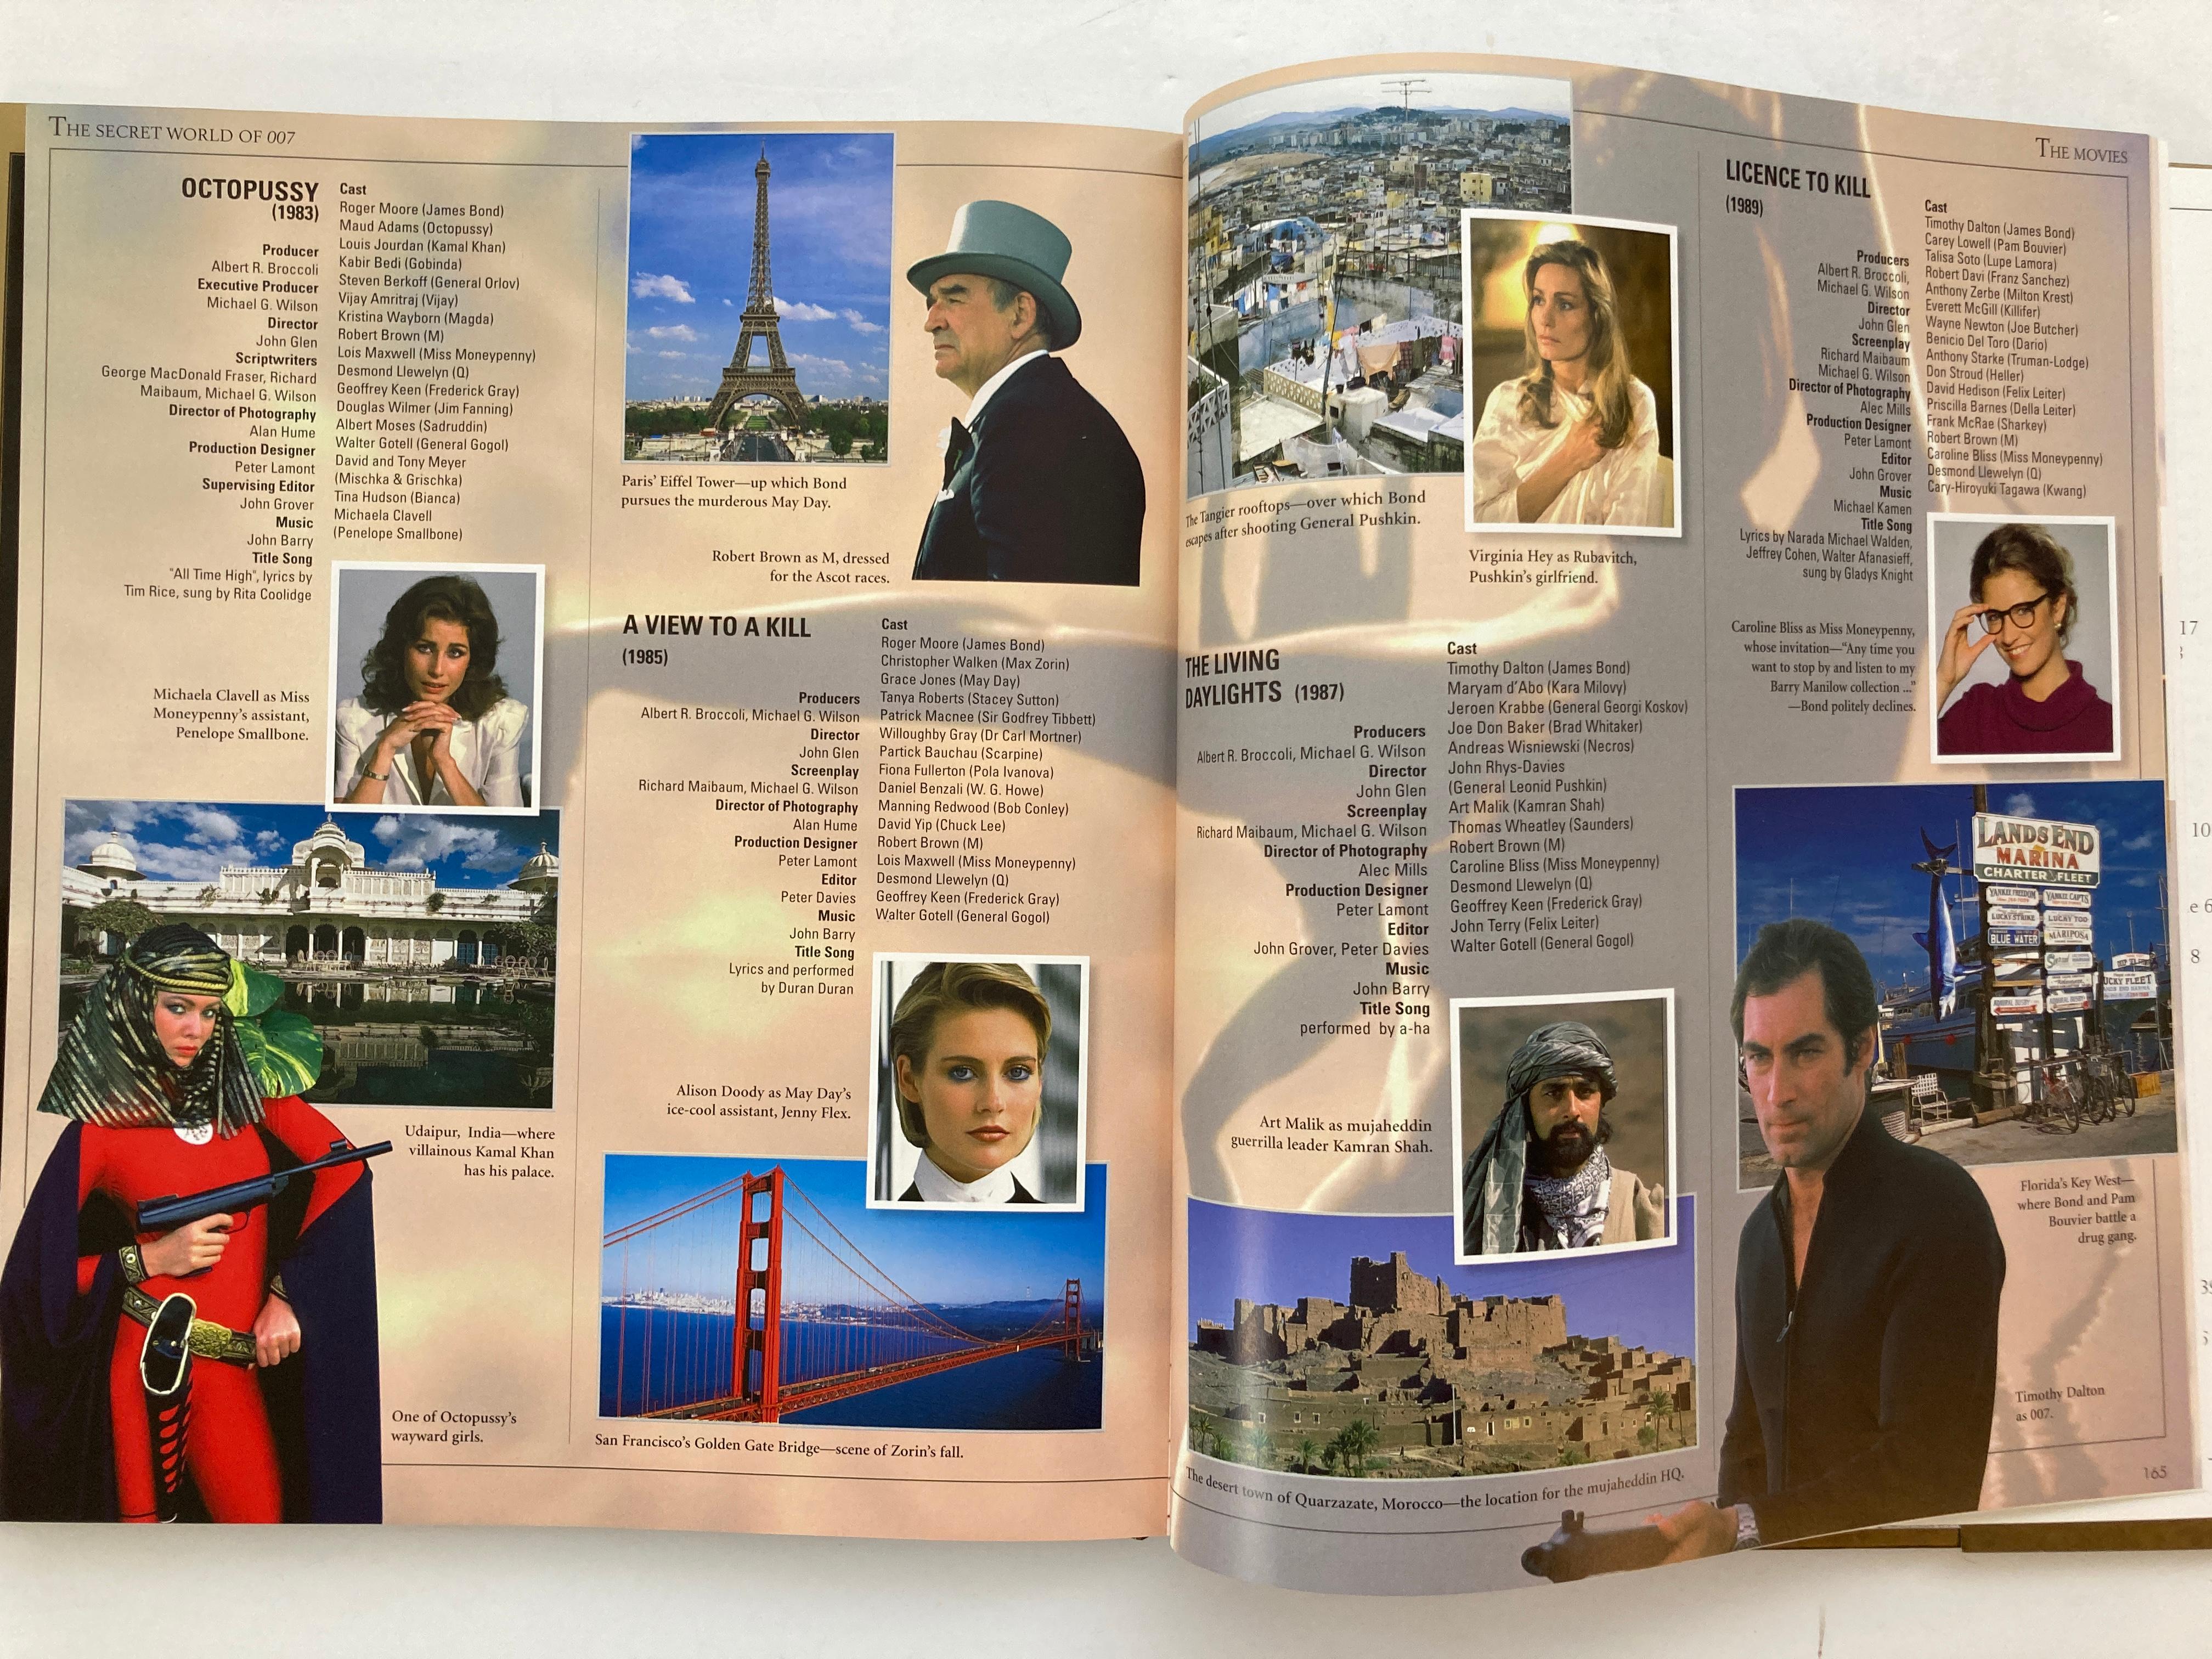 James Bond The Secret World of 007 Hardcover Book 8